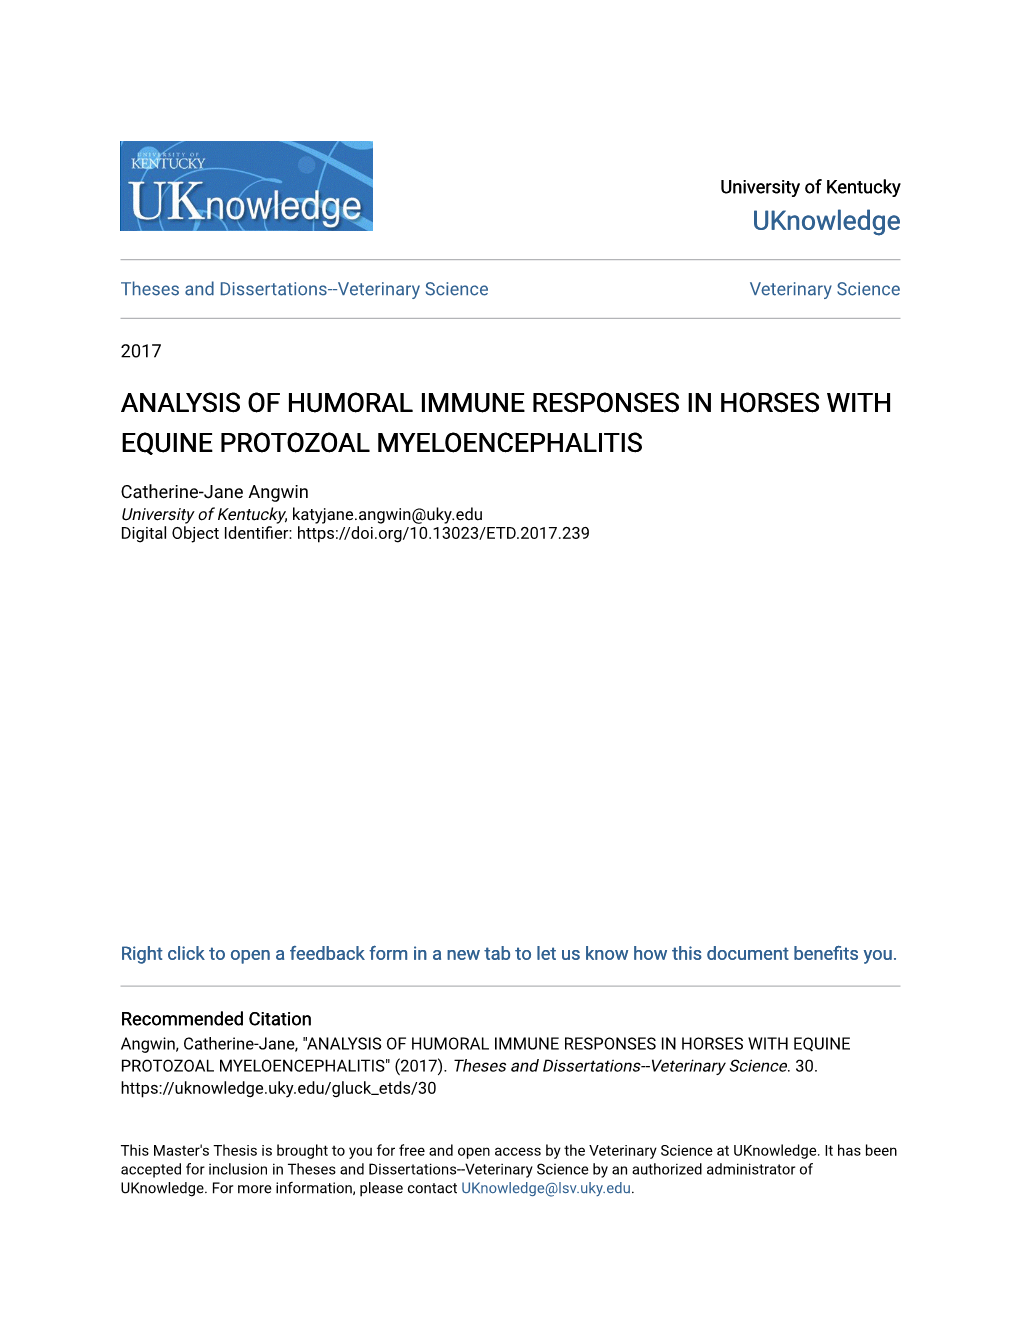 Analysis of Humoral Immune Responses in Horses with Equine Protozoal Myeloencephalitis